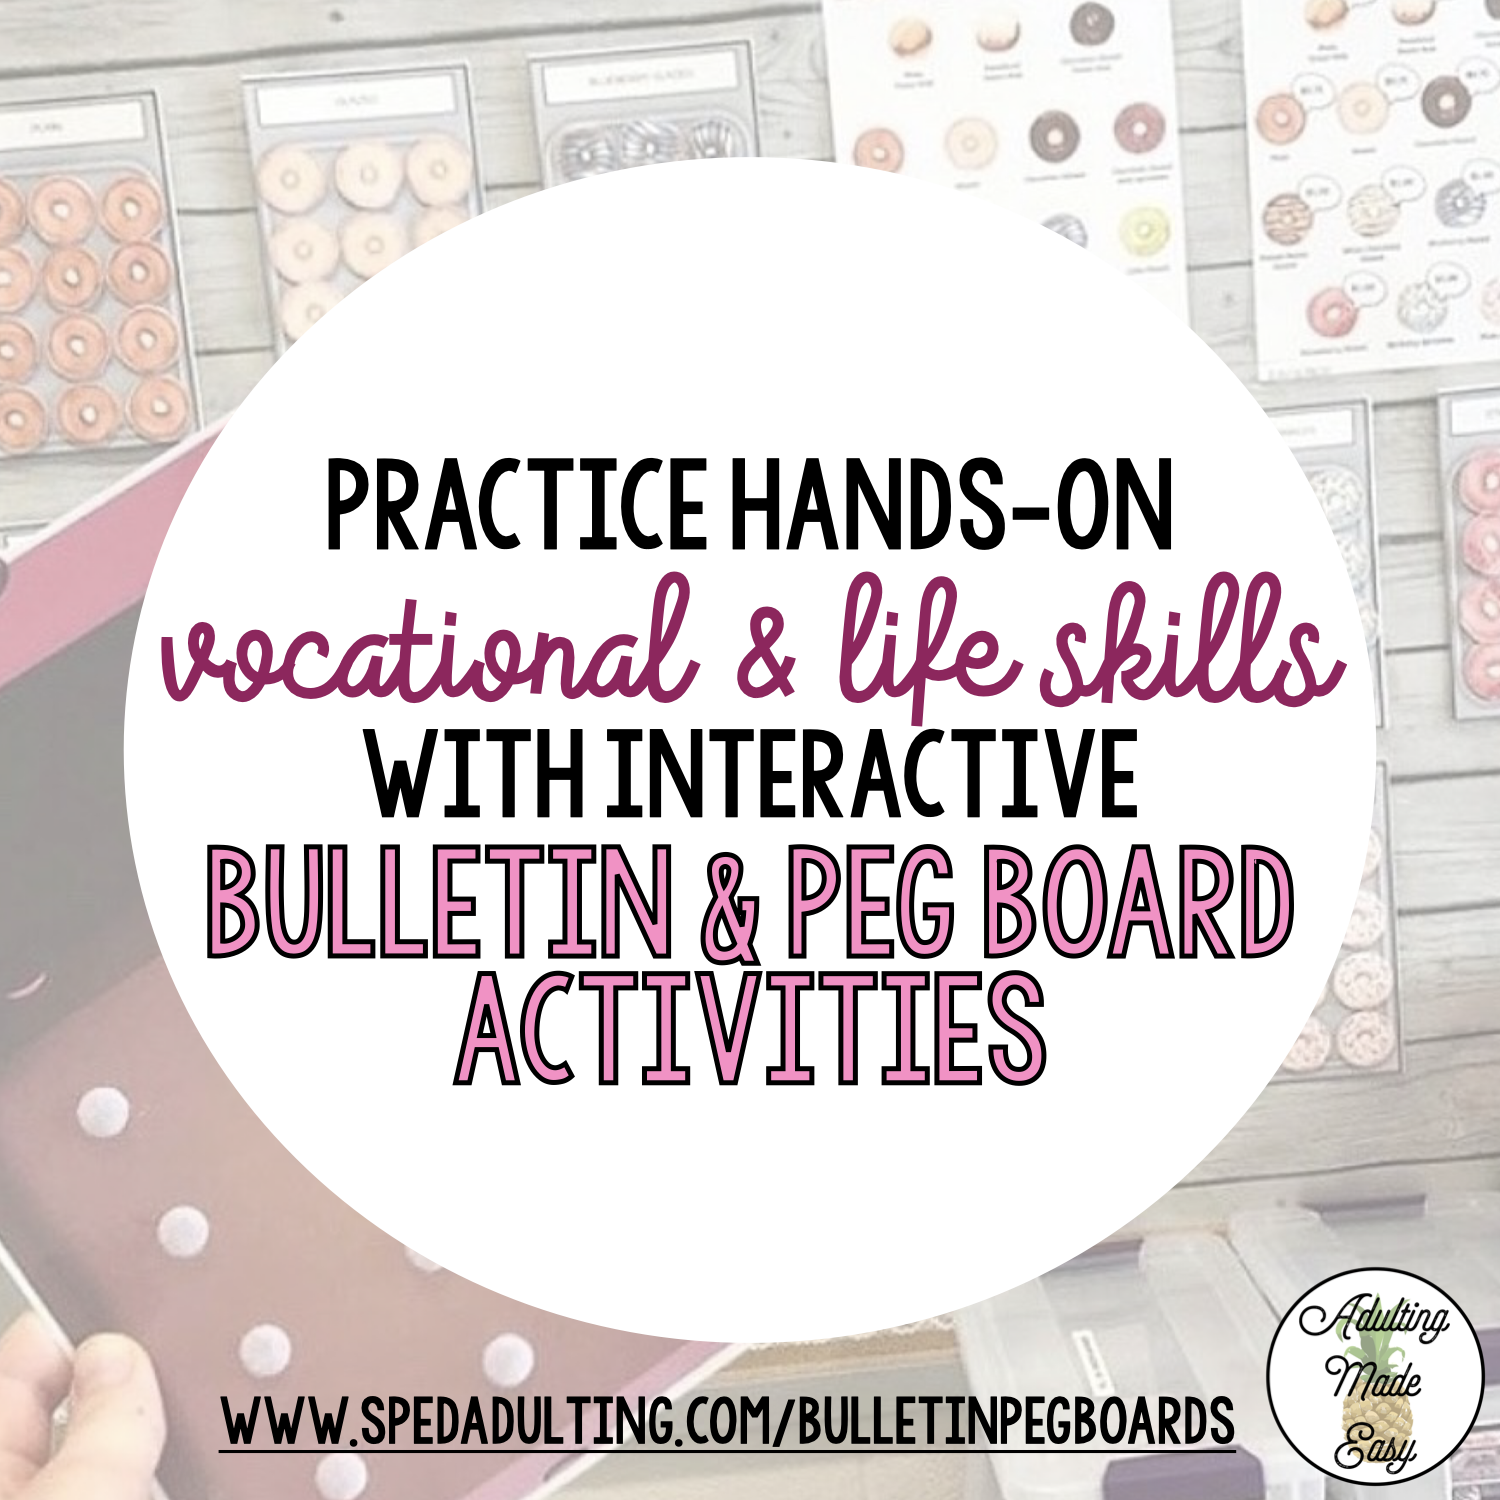 Practice Hands On Vocational & Life Skills through Interactive Bulletin/Peg Board Activities